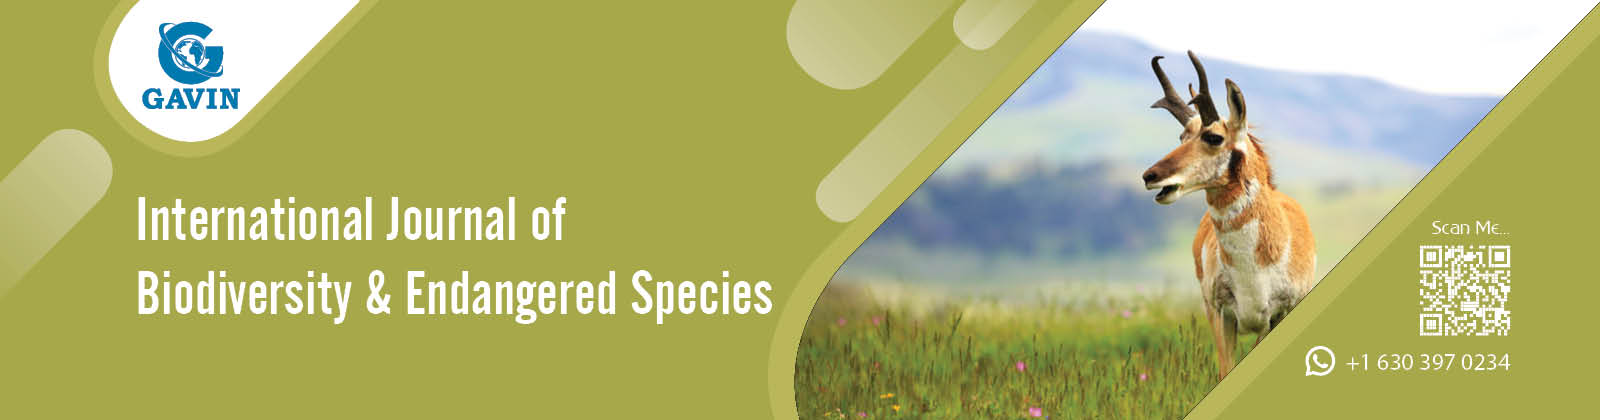 International Journal of Biodiversity & Endangered Species